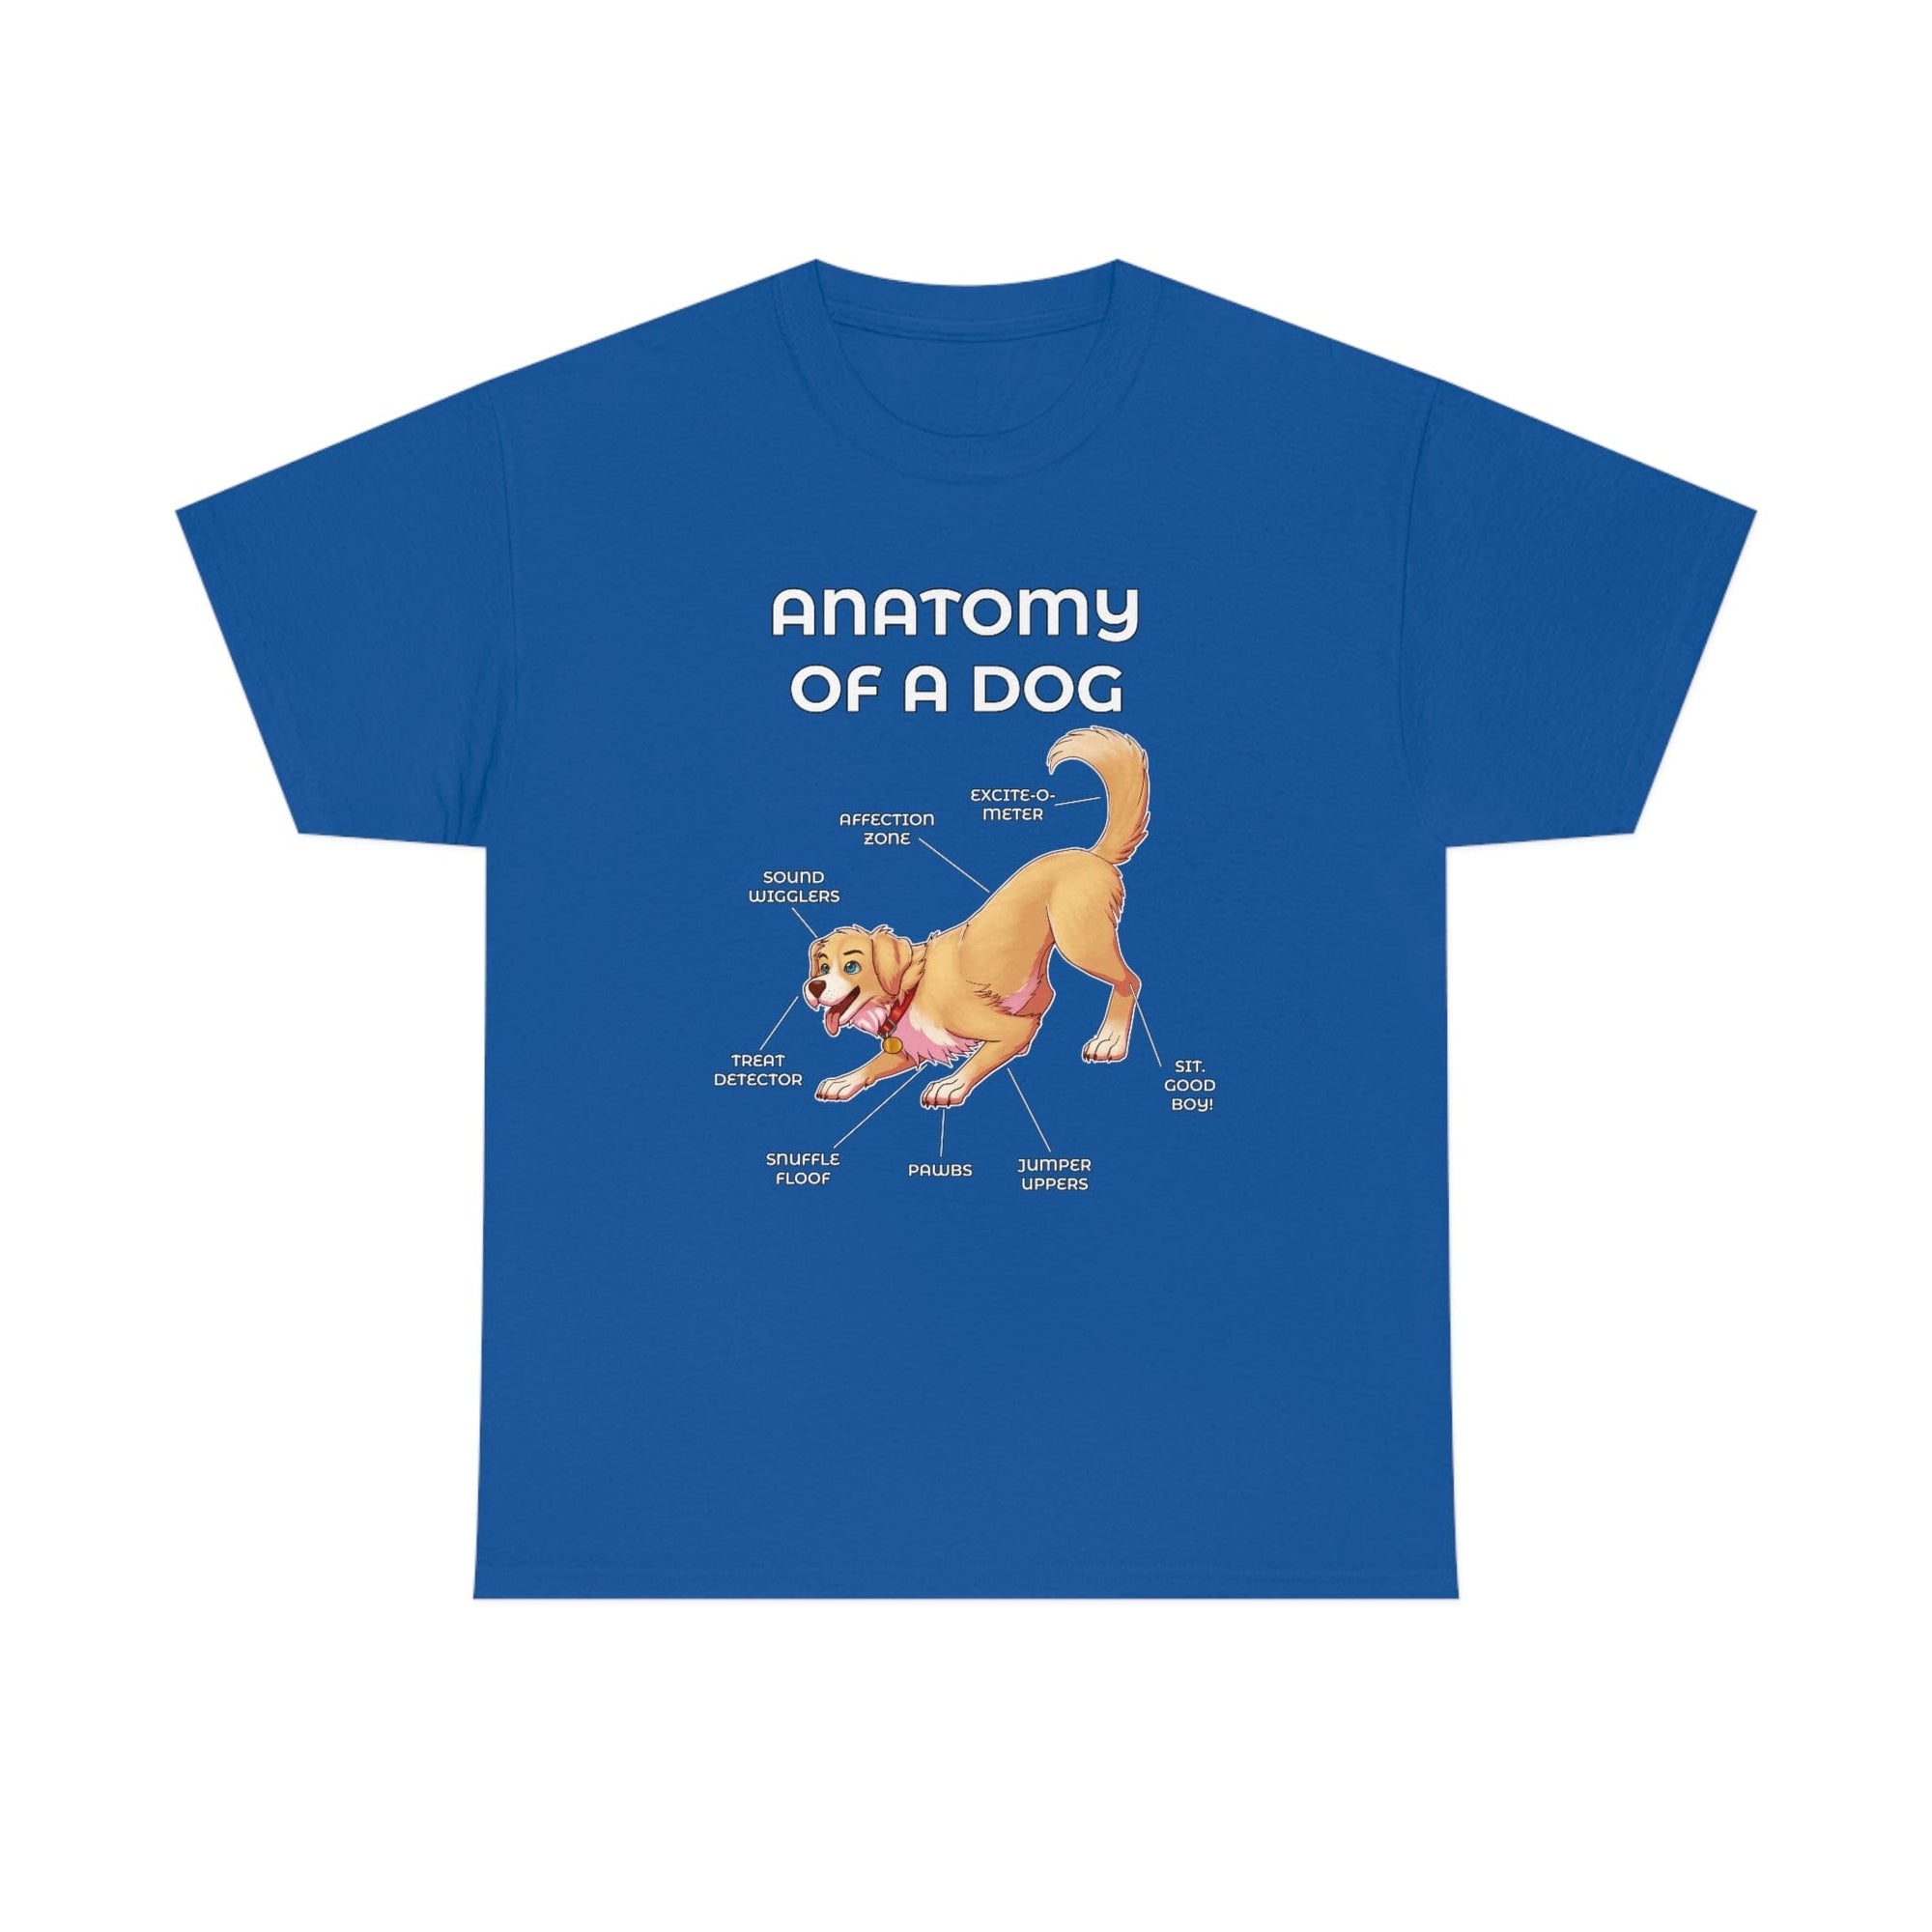 Dog Yellow - T-Shirt T-Shirt Artworktee Royal Blue S 